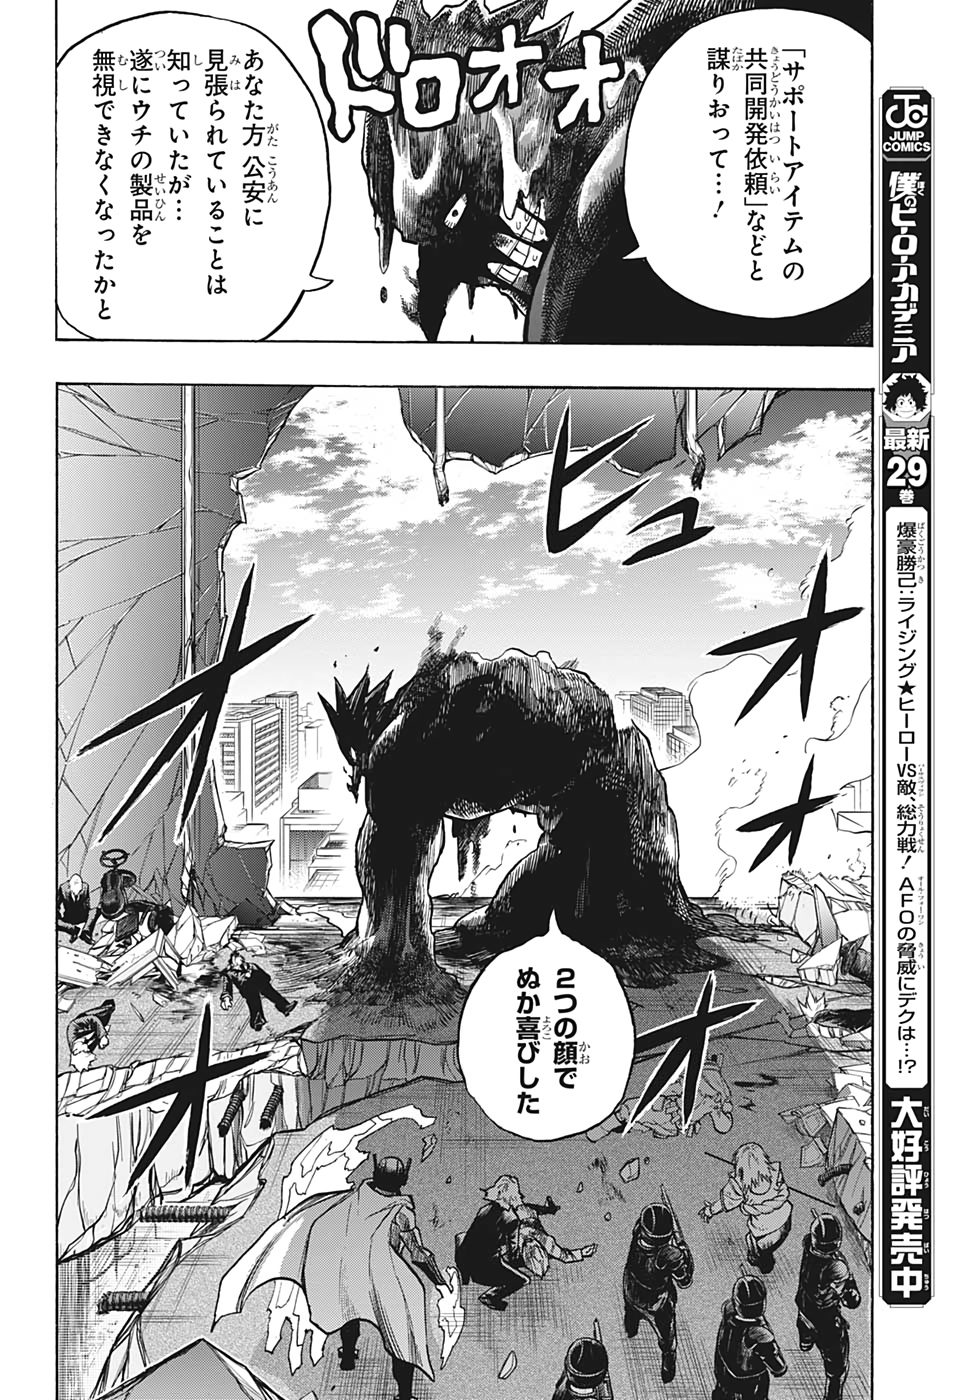 Boku no Hero Academia - Chapter 298 - Page 2